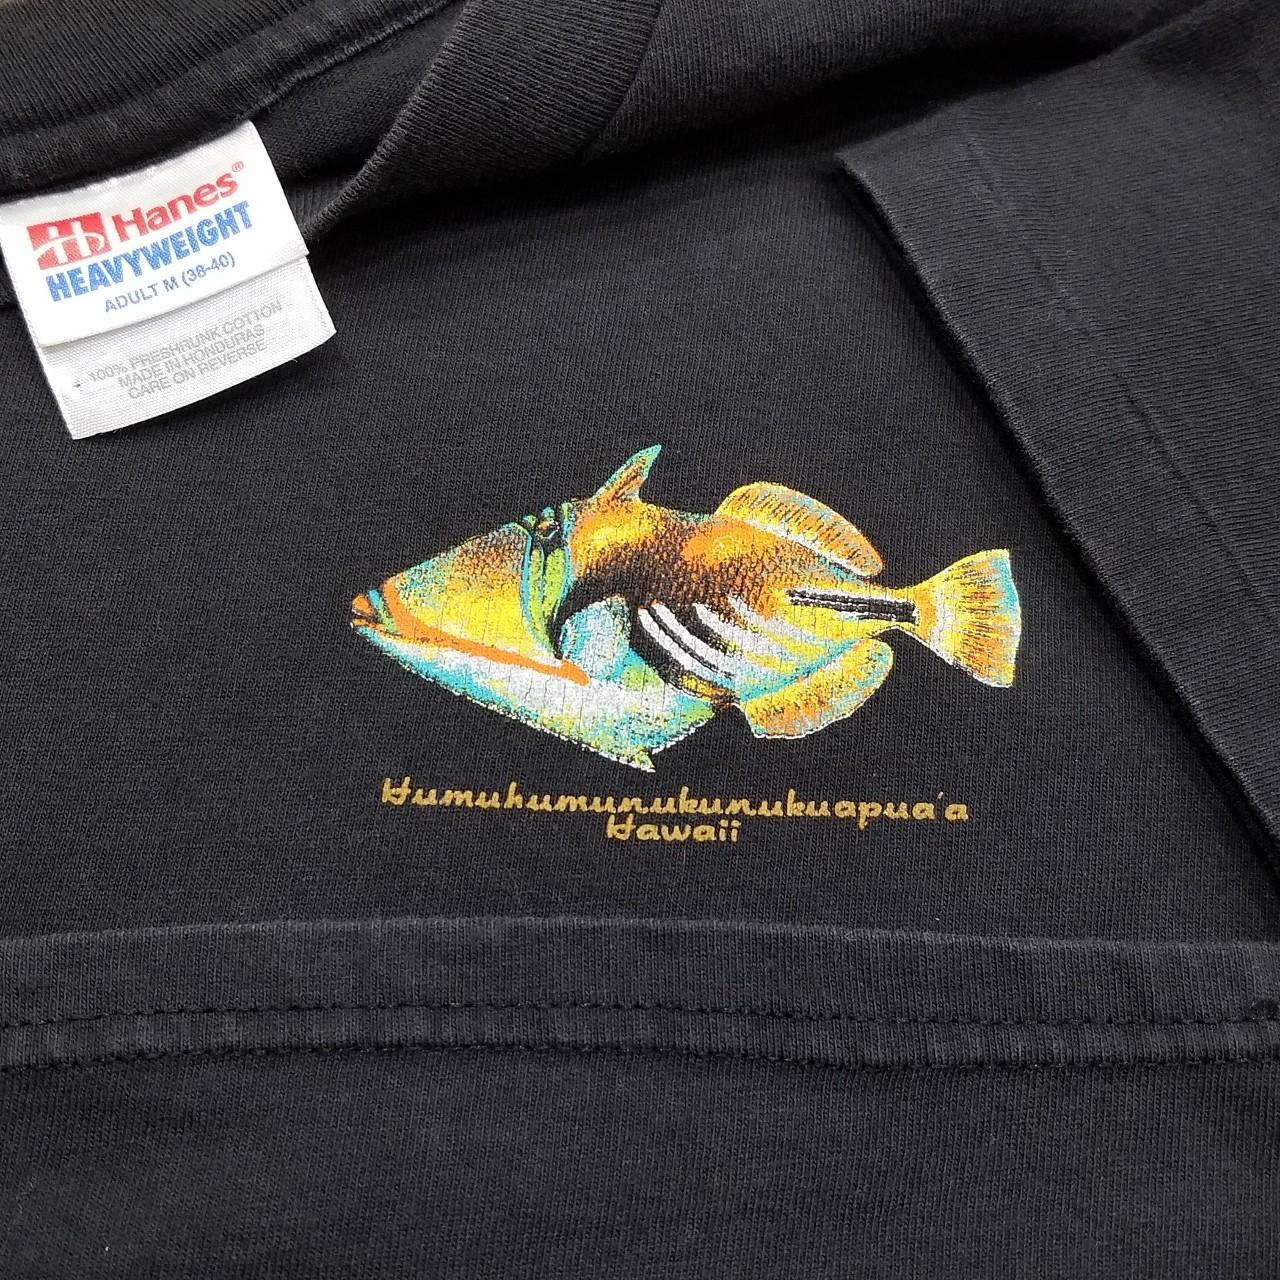 Vintage 90s Fish colorful t shirt. Antigua island - Depop